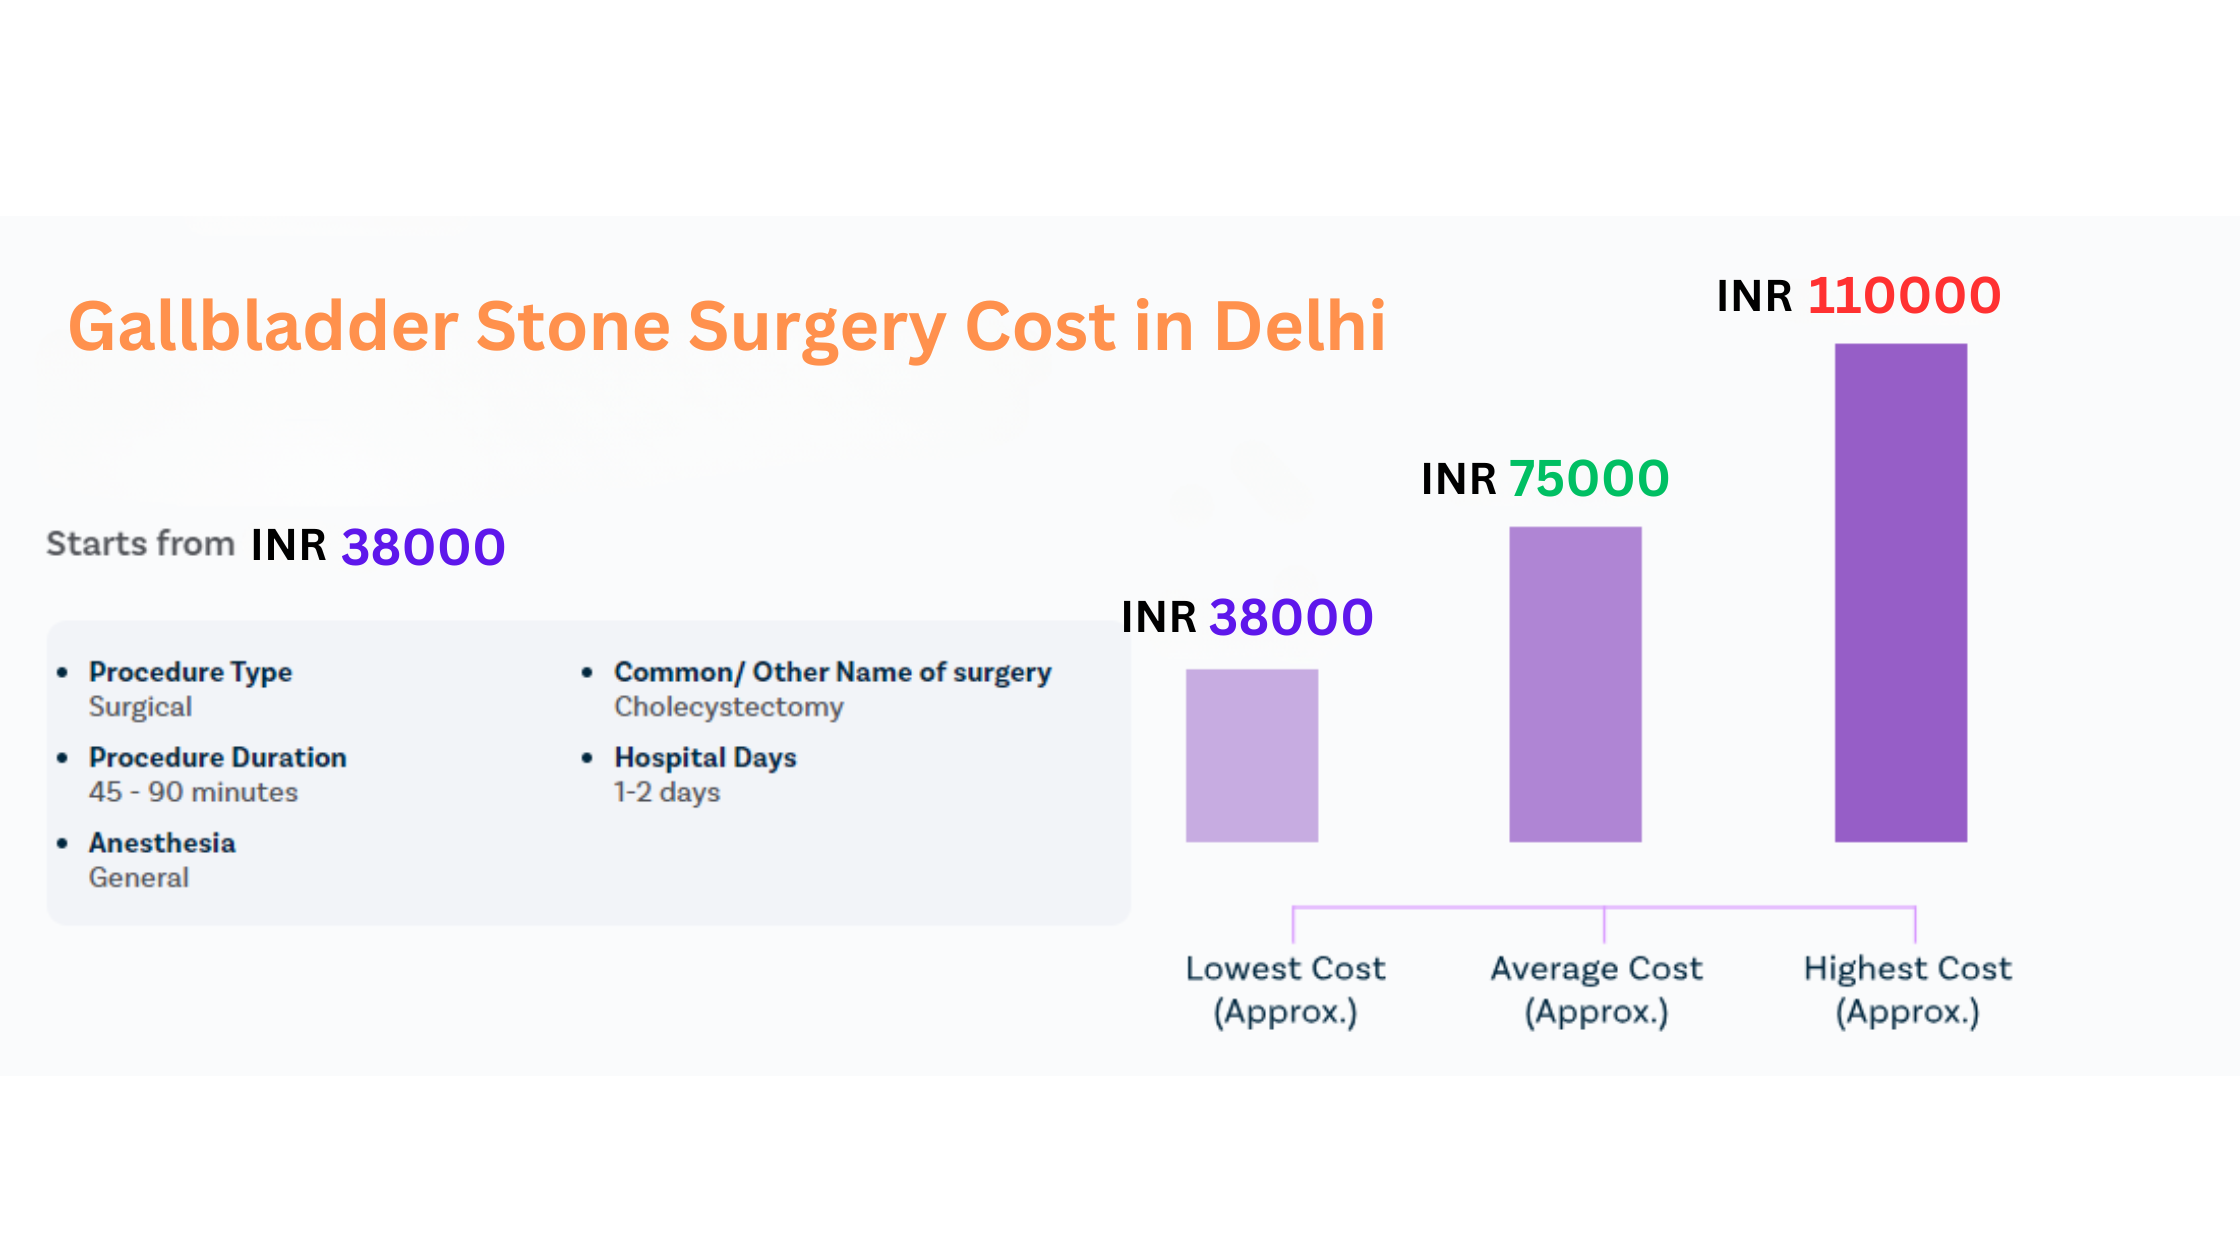 Gallbladder Stone Surgery Cost in Delhi